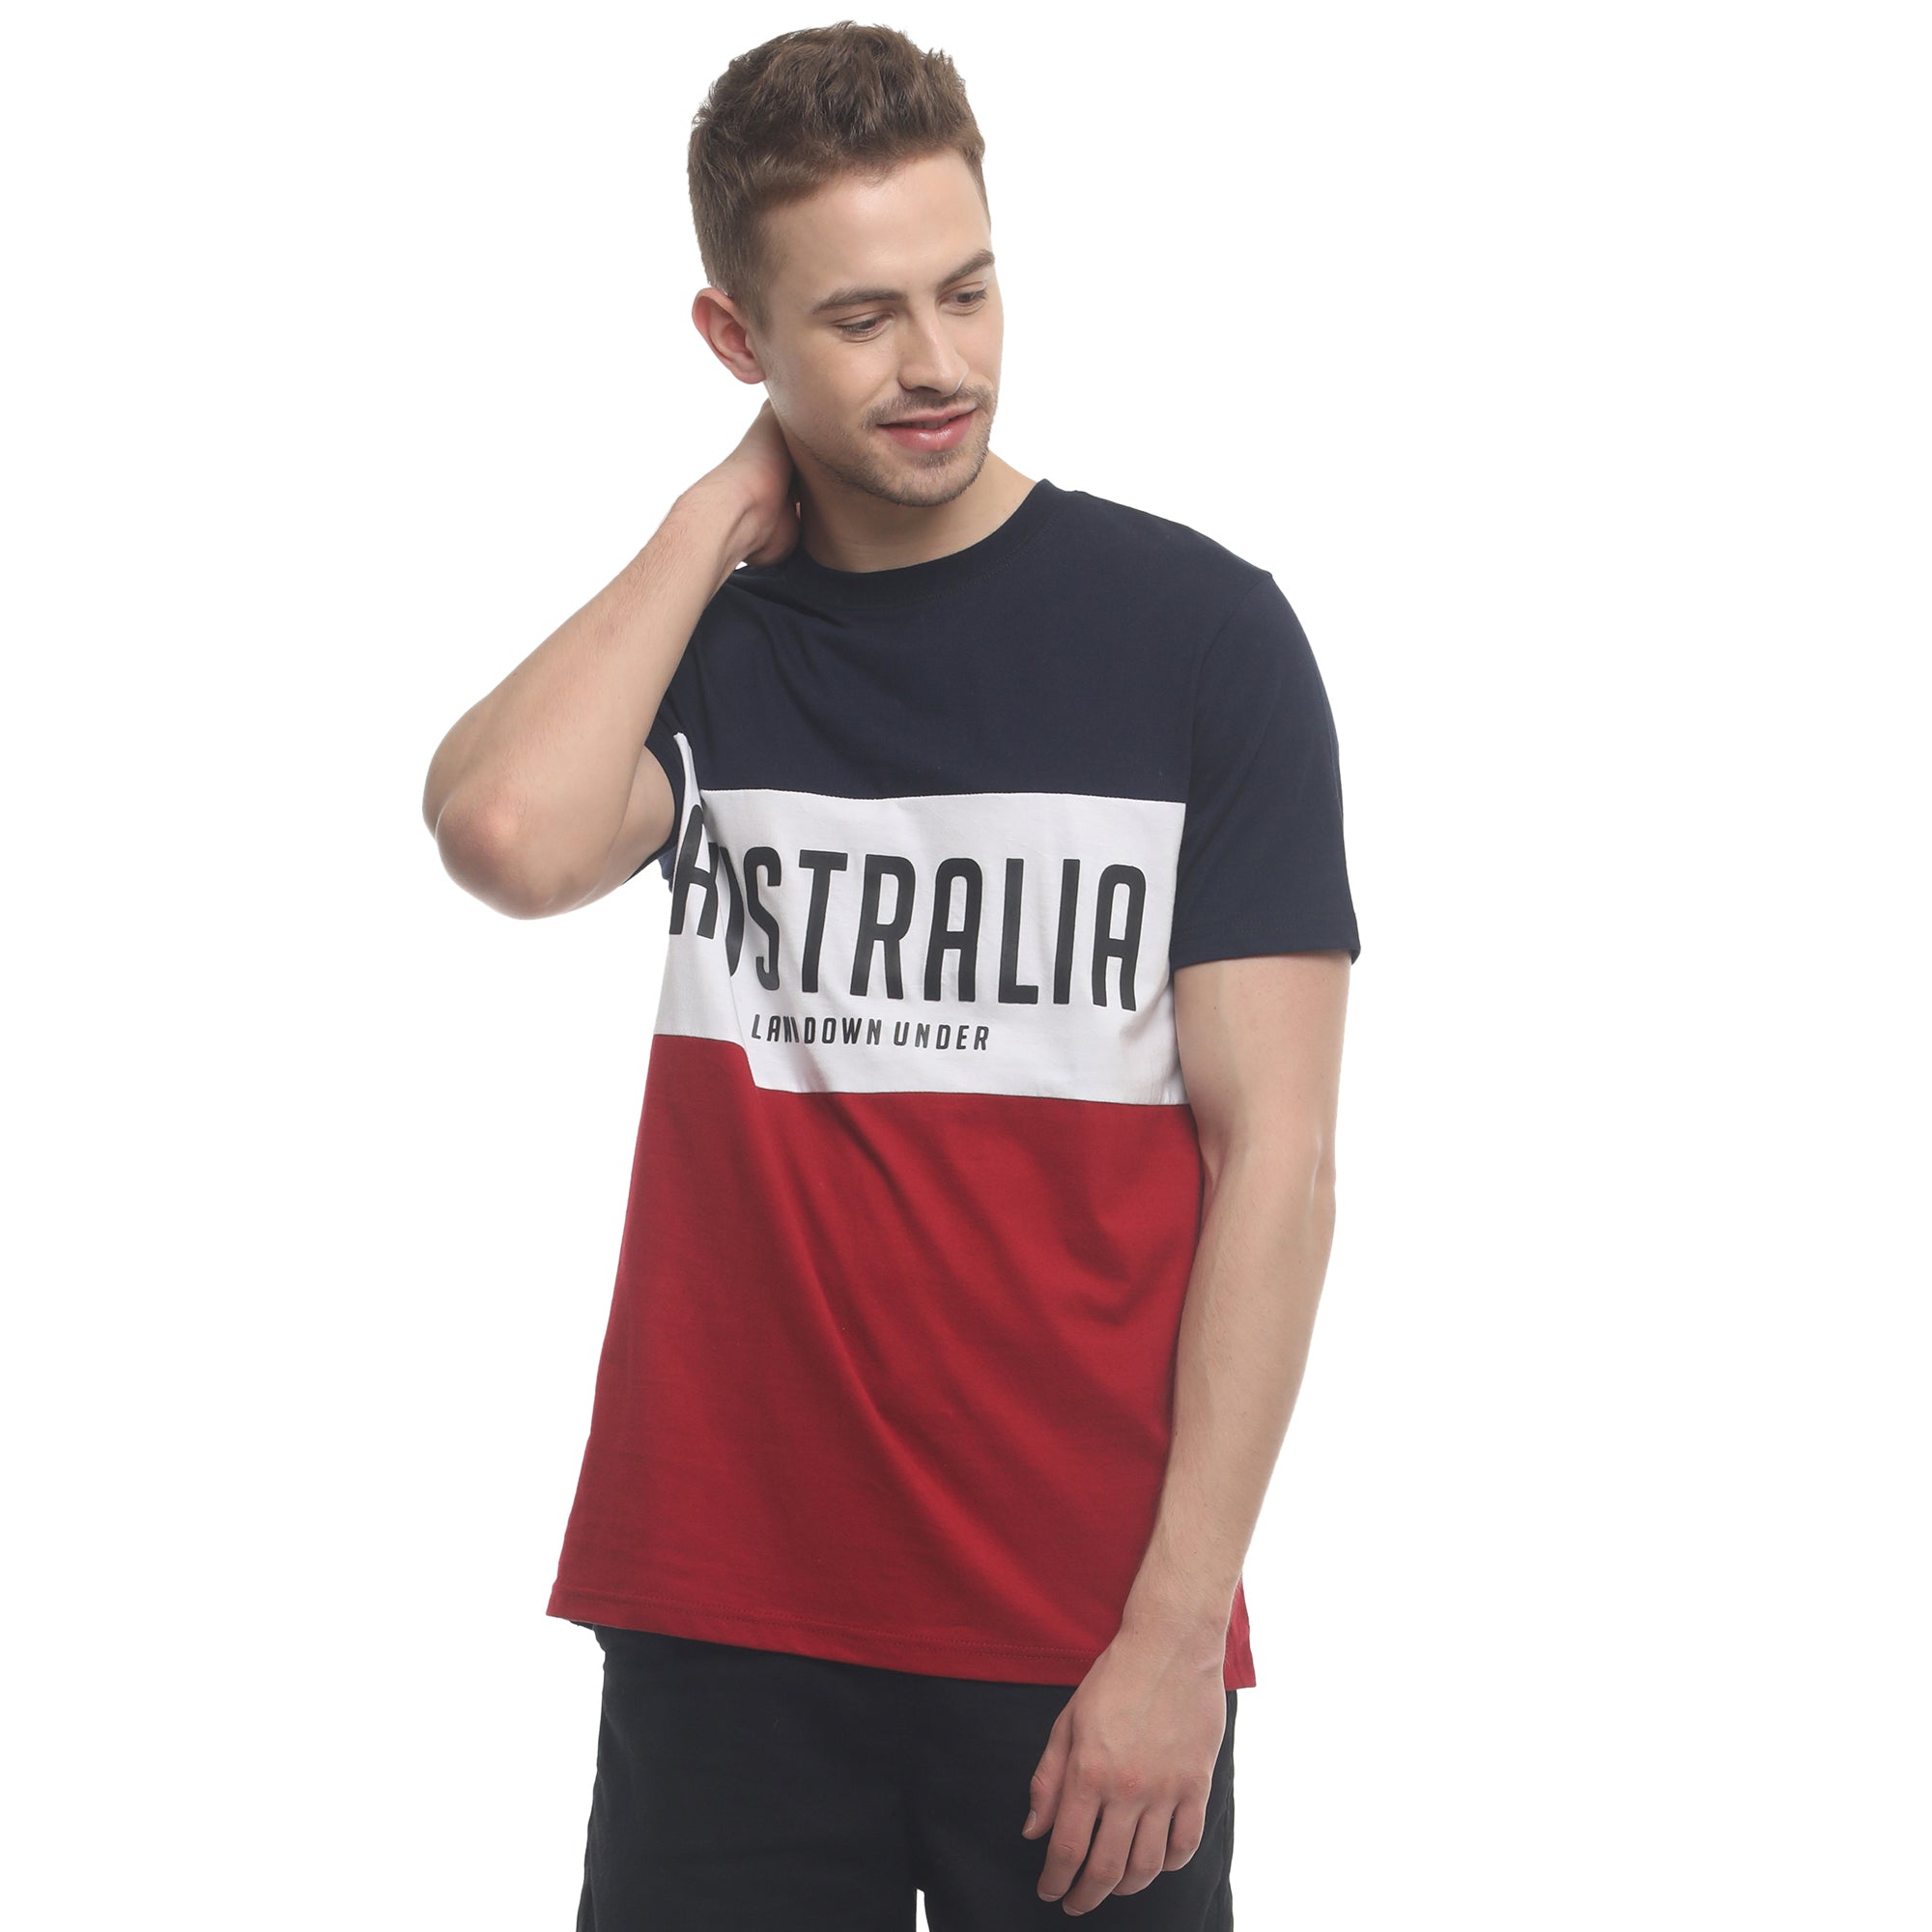 Australia Land Down Under Tricolour T-Shirt